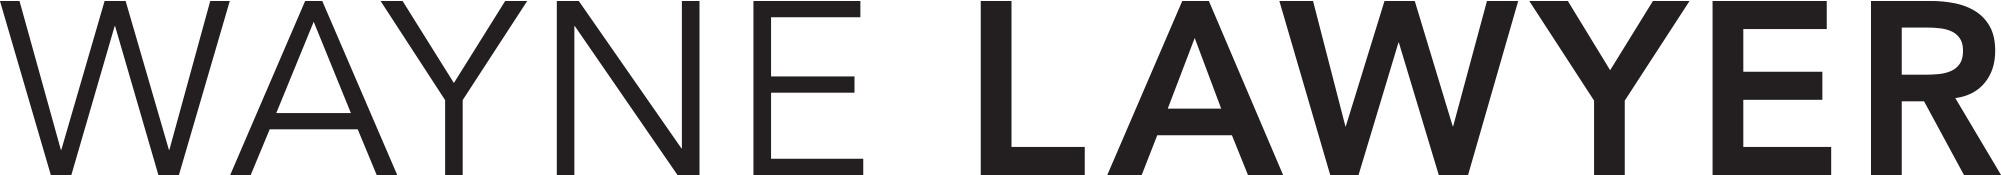 Wayne Lawyer logo